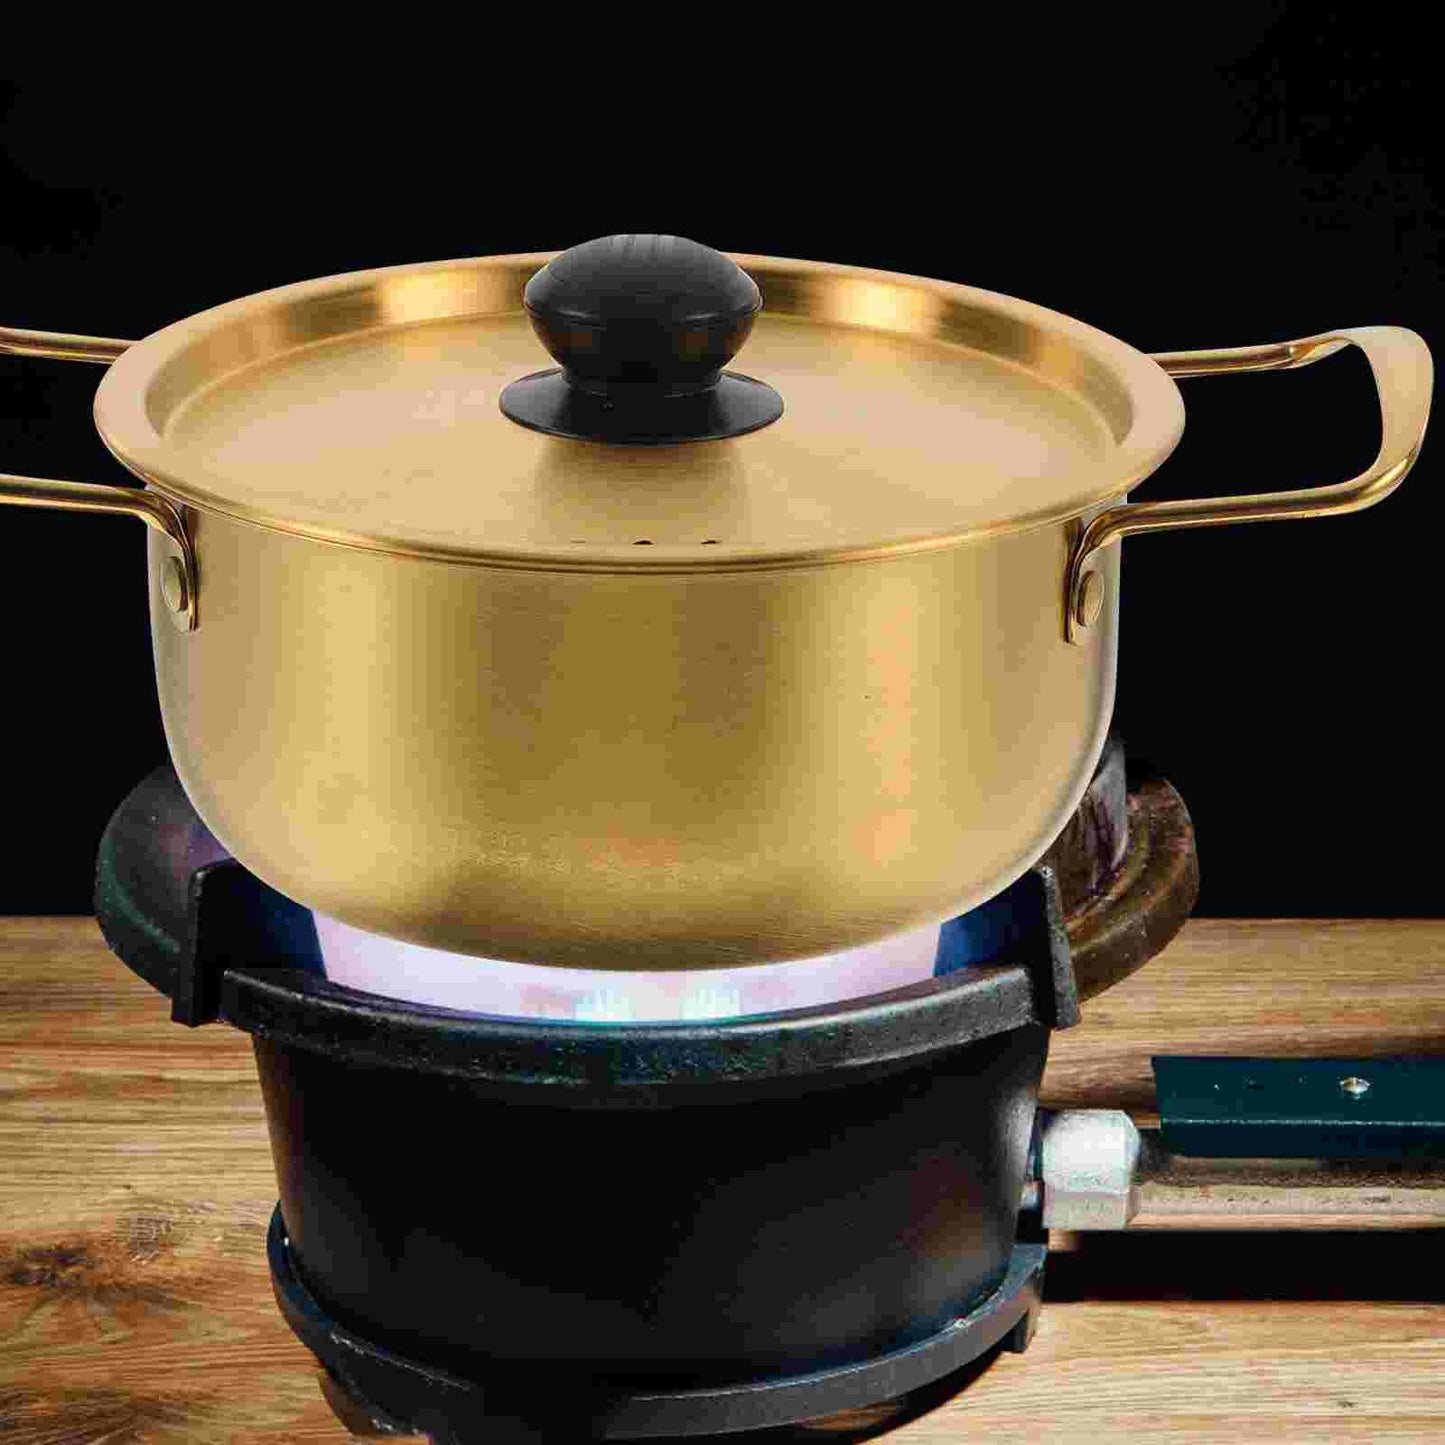 Instant Noodle Pot Kitchen Stainless Steel Cookware Soup Pots Cooking Large Pan Lid Korean Big